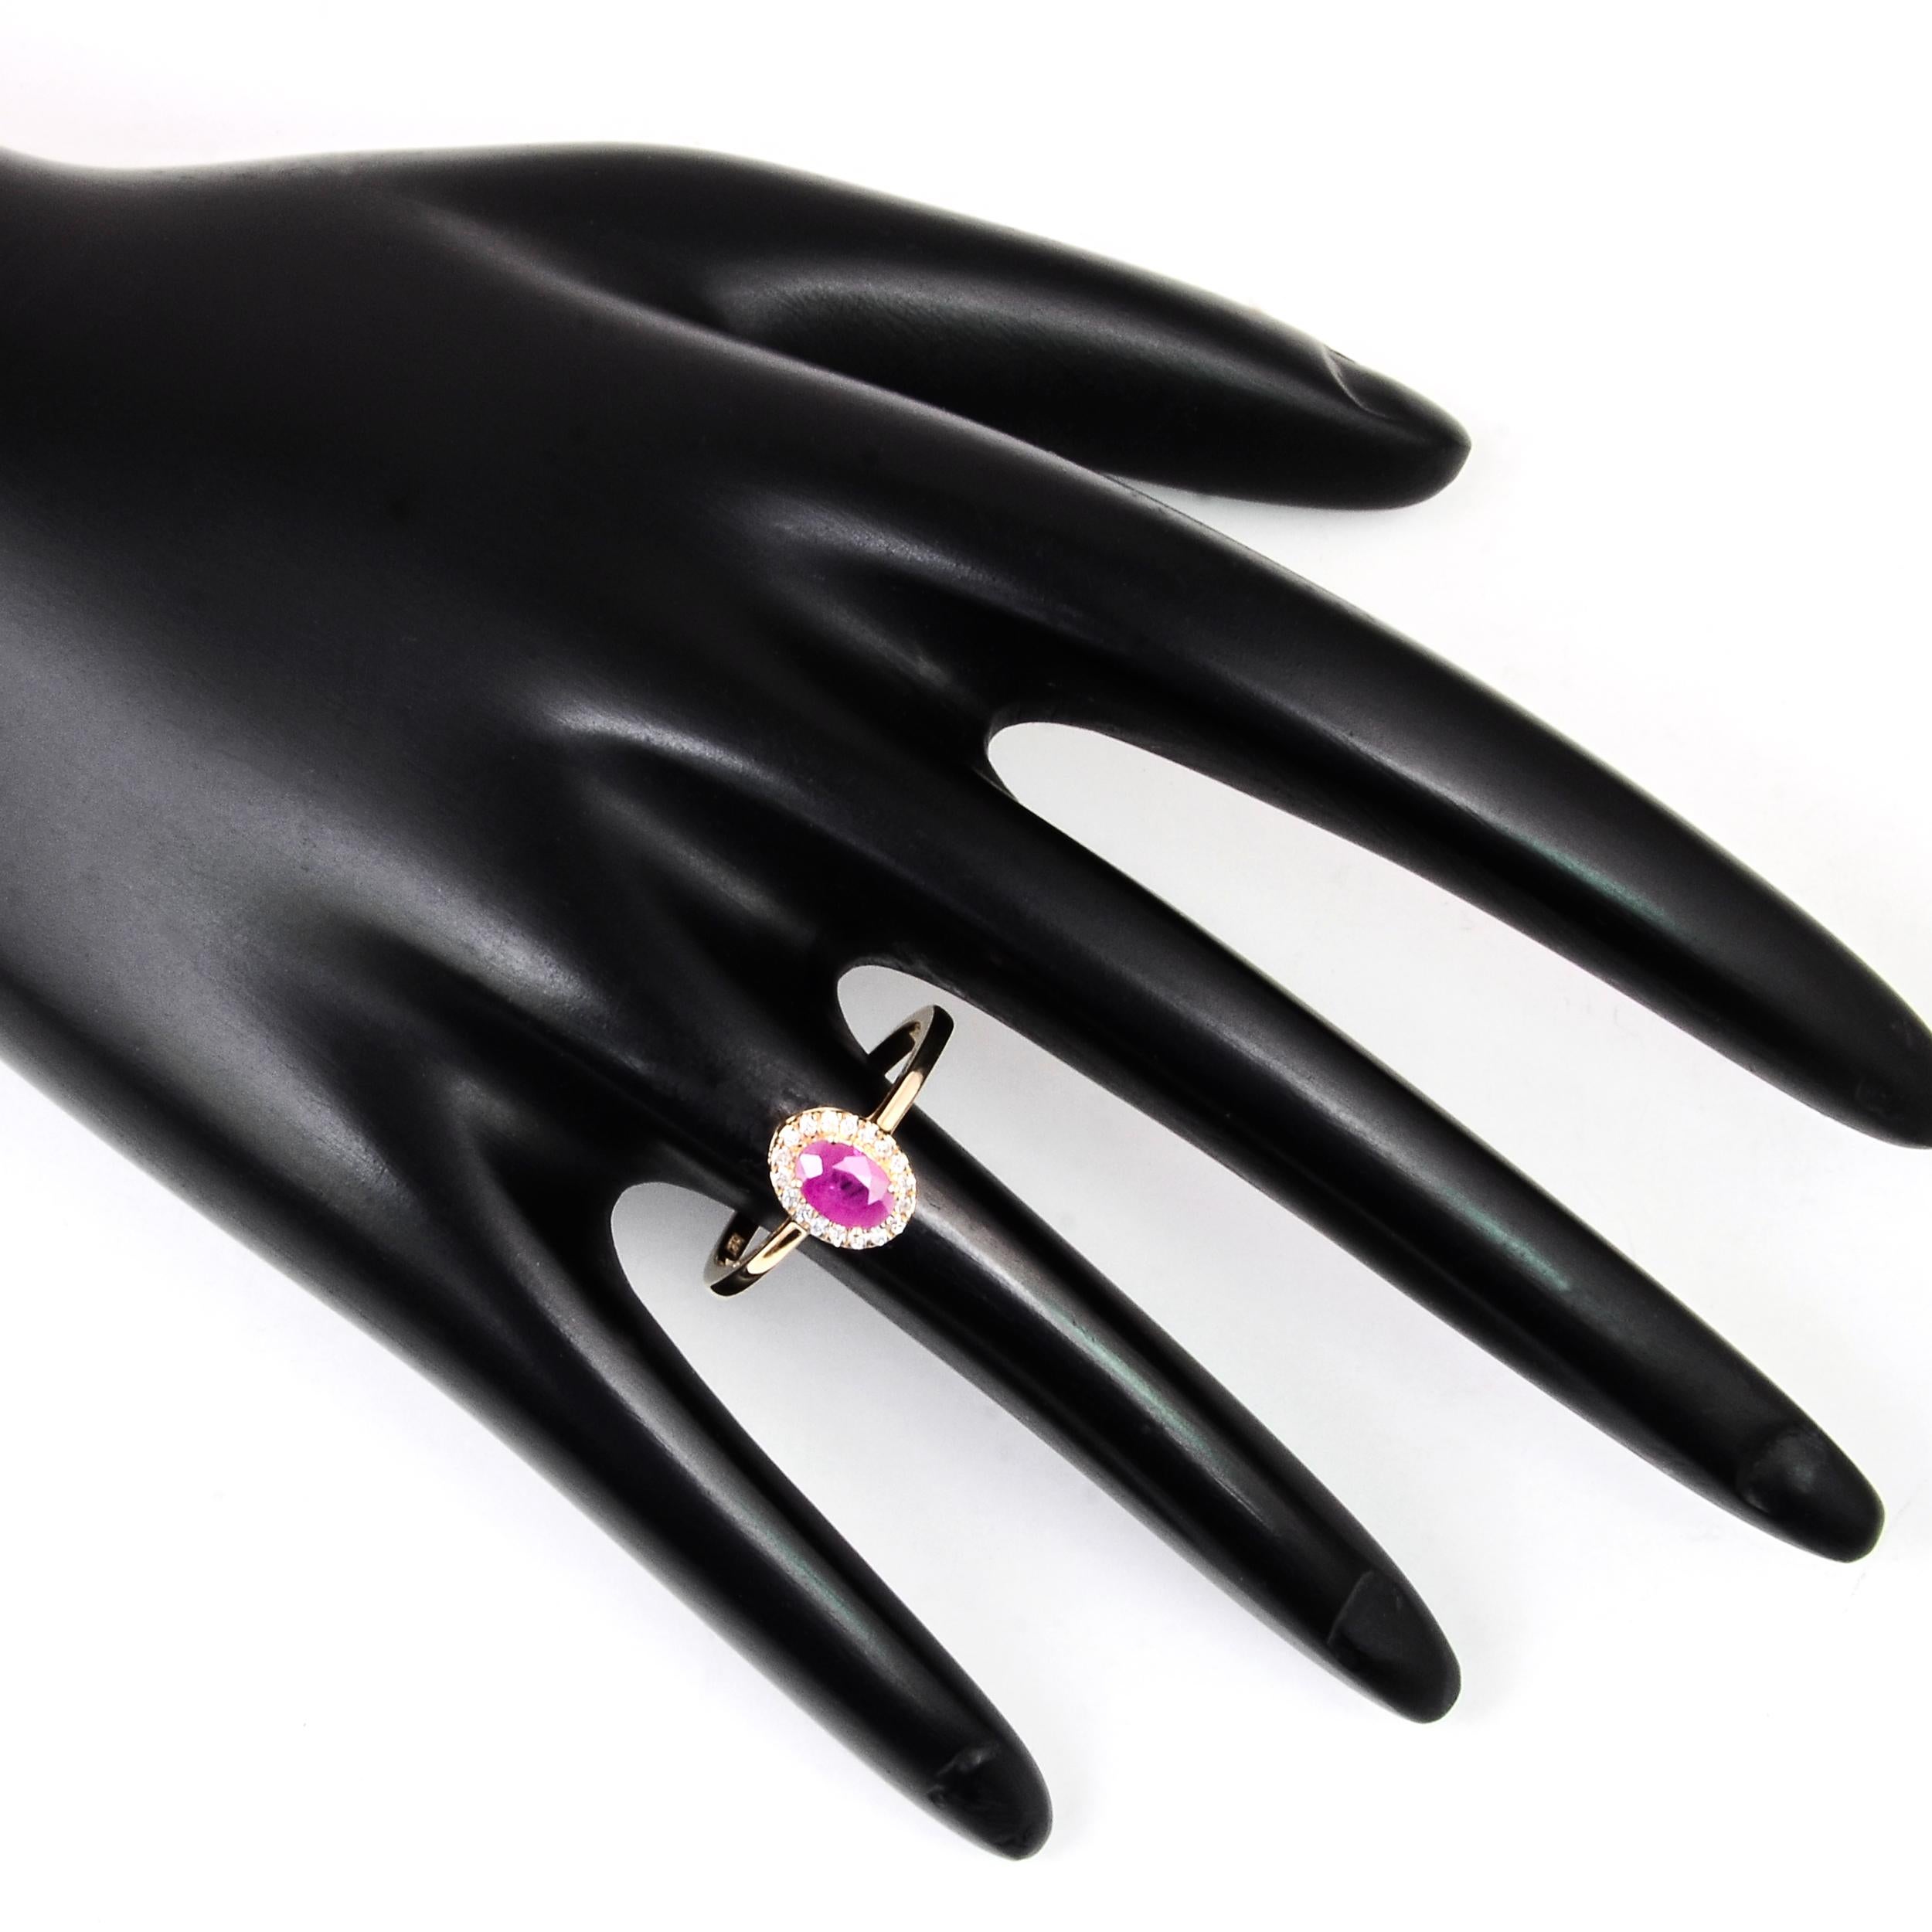 Elegant 14K Ruby & Diamond Cocktail Ring, Size 7 - Statement Jewelry Piece For Sale 4